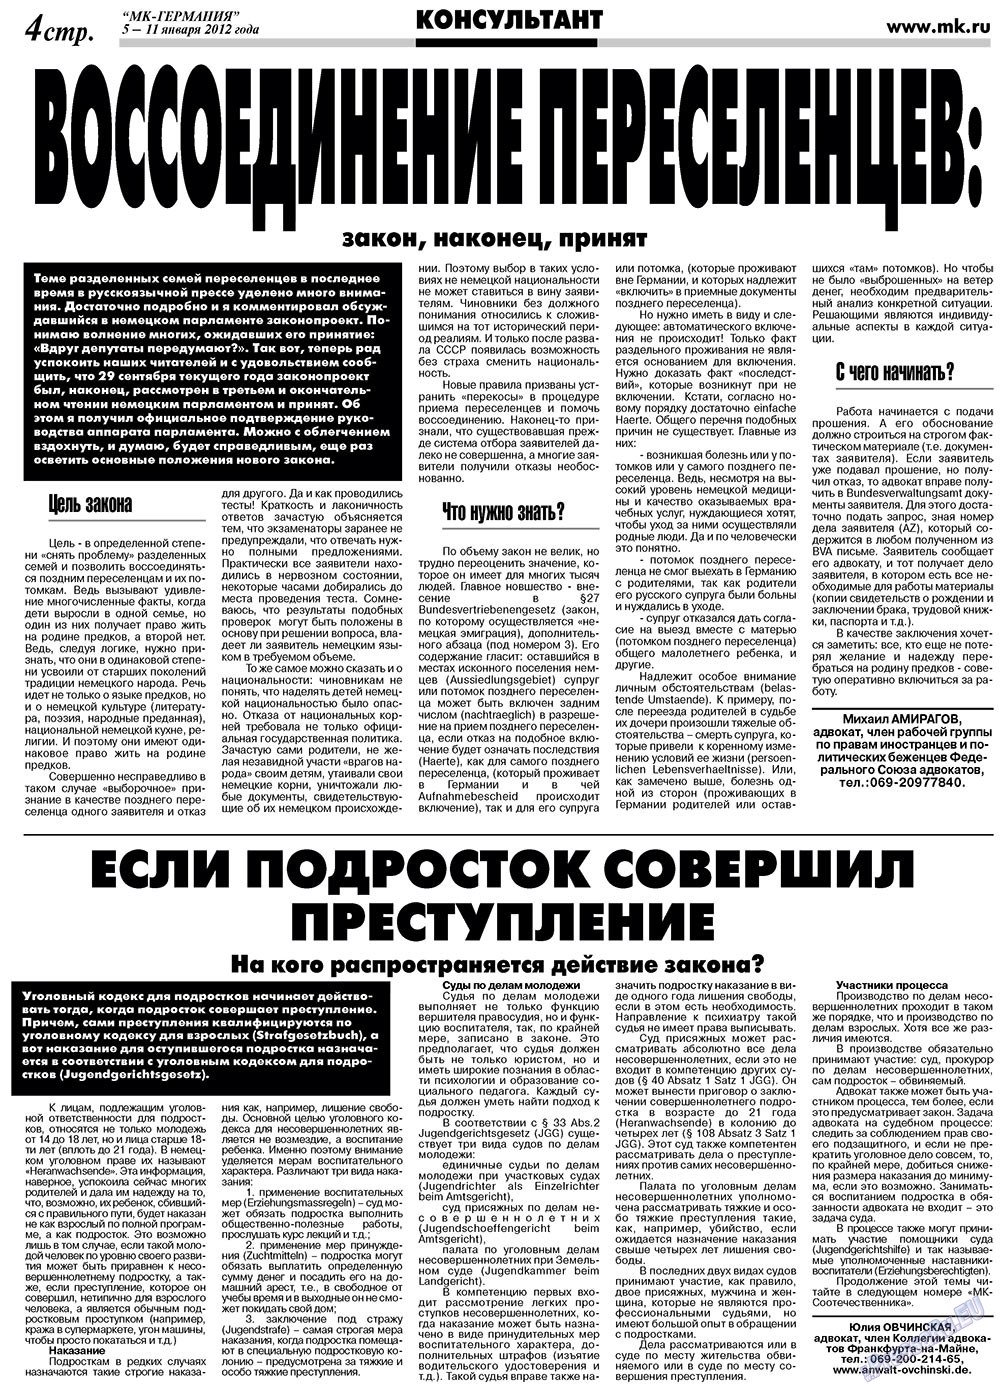 МК-Германия, газета. 2012 №1 стр.4